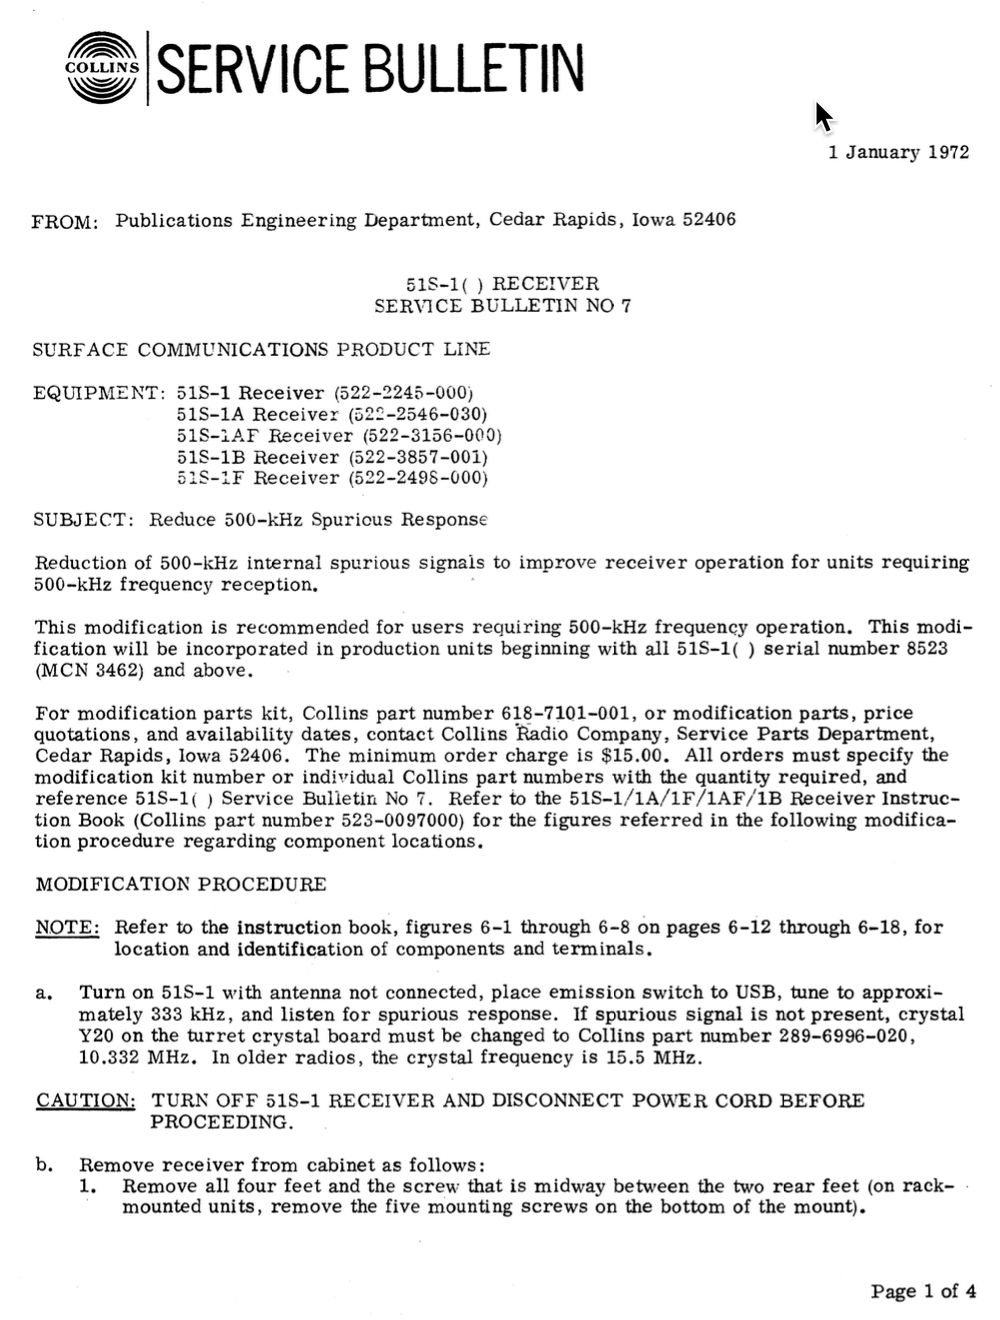 Collins 51S-1 Receiver - Service Bulletin Number 7 (1972-01)